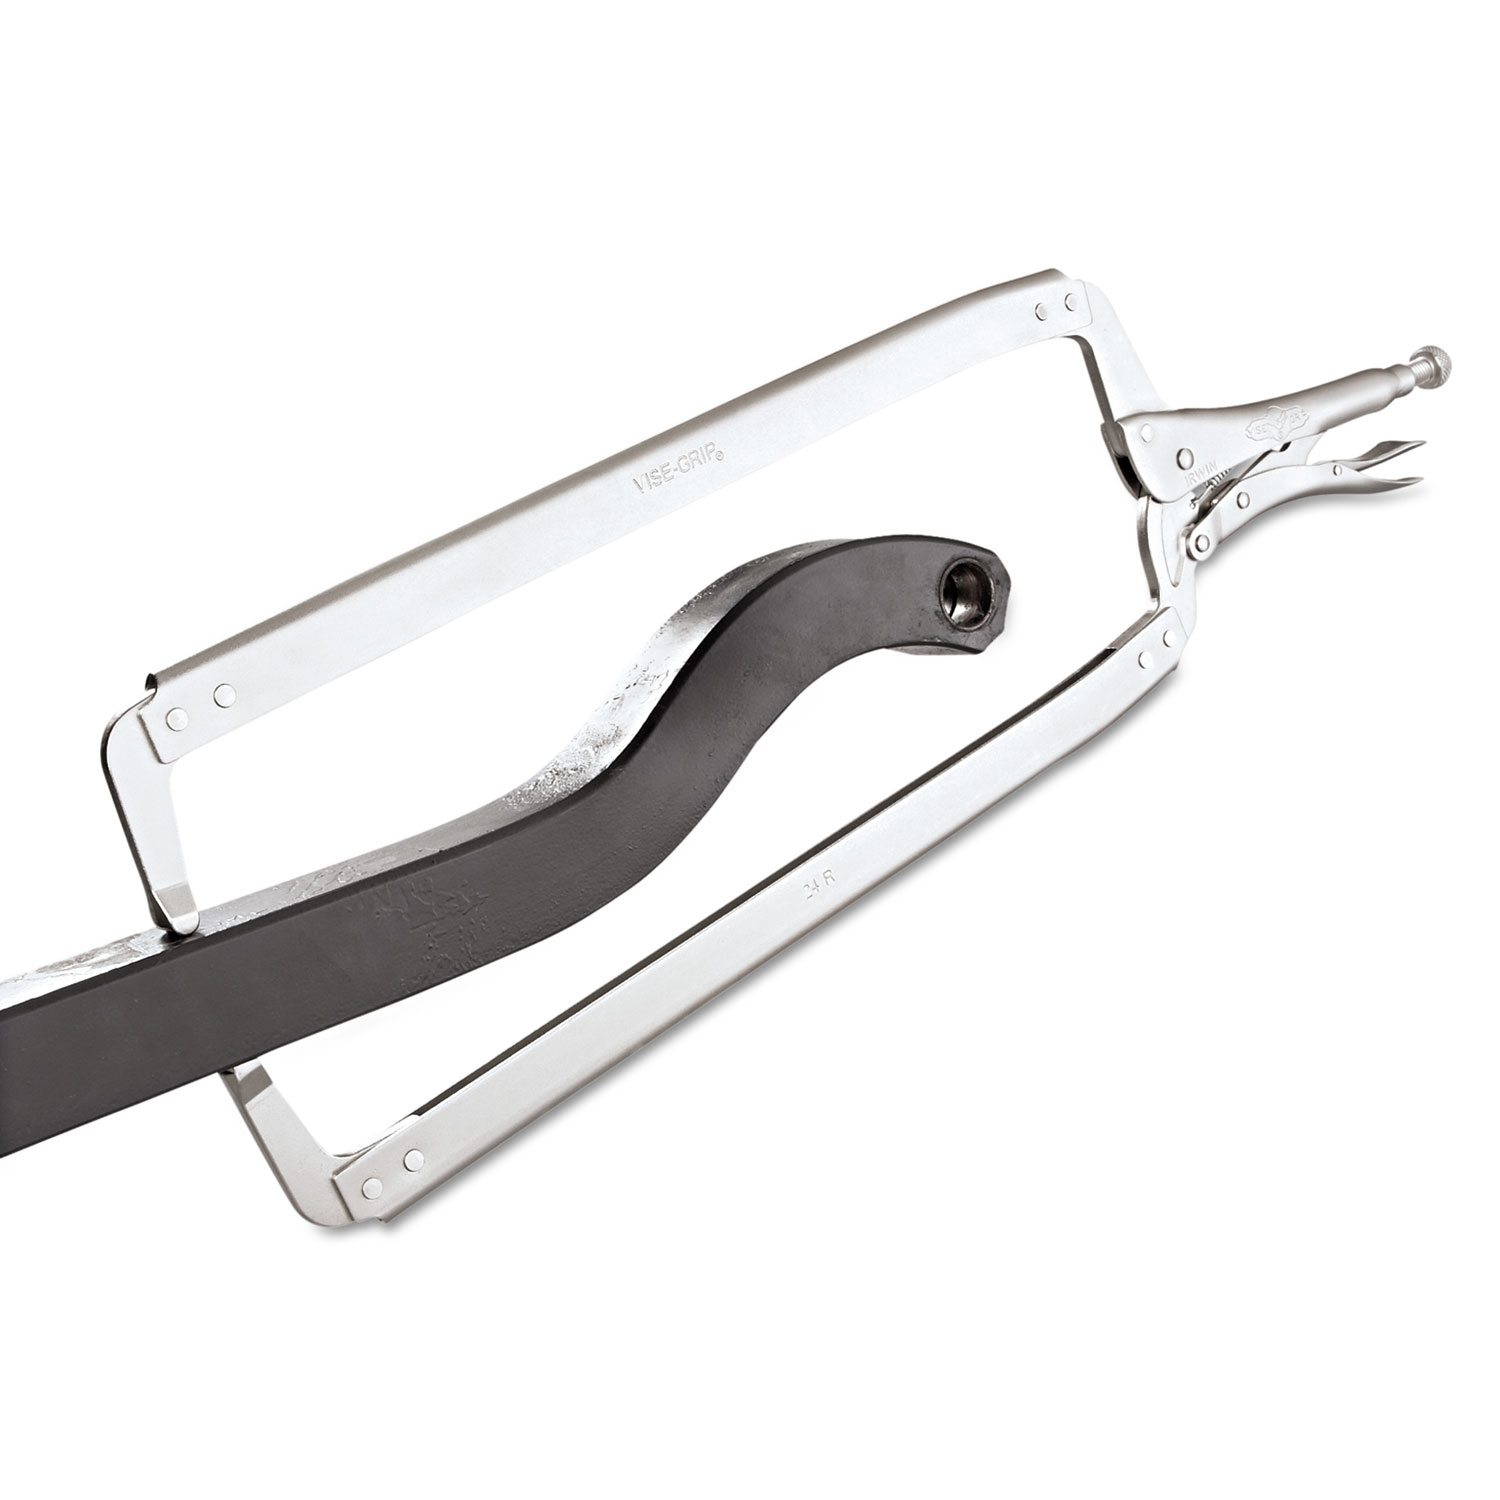 Original Locking C-Clamp Pliers, 24 Tool Length, 10 Jaw Capacity